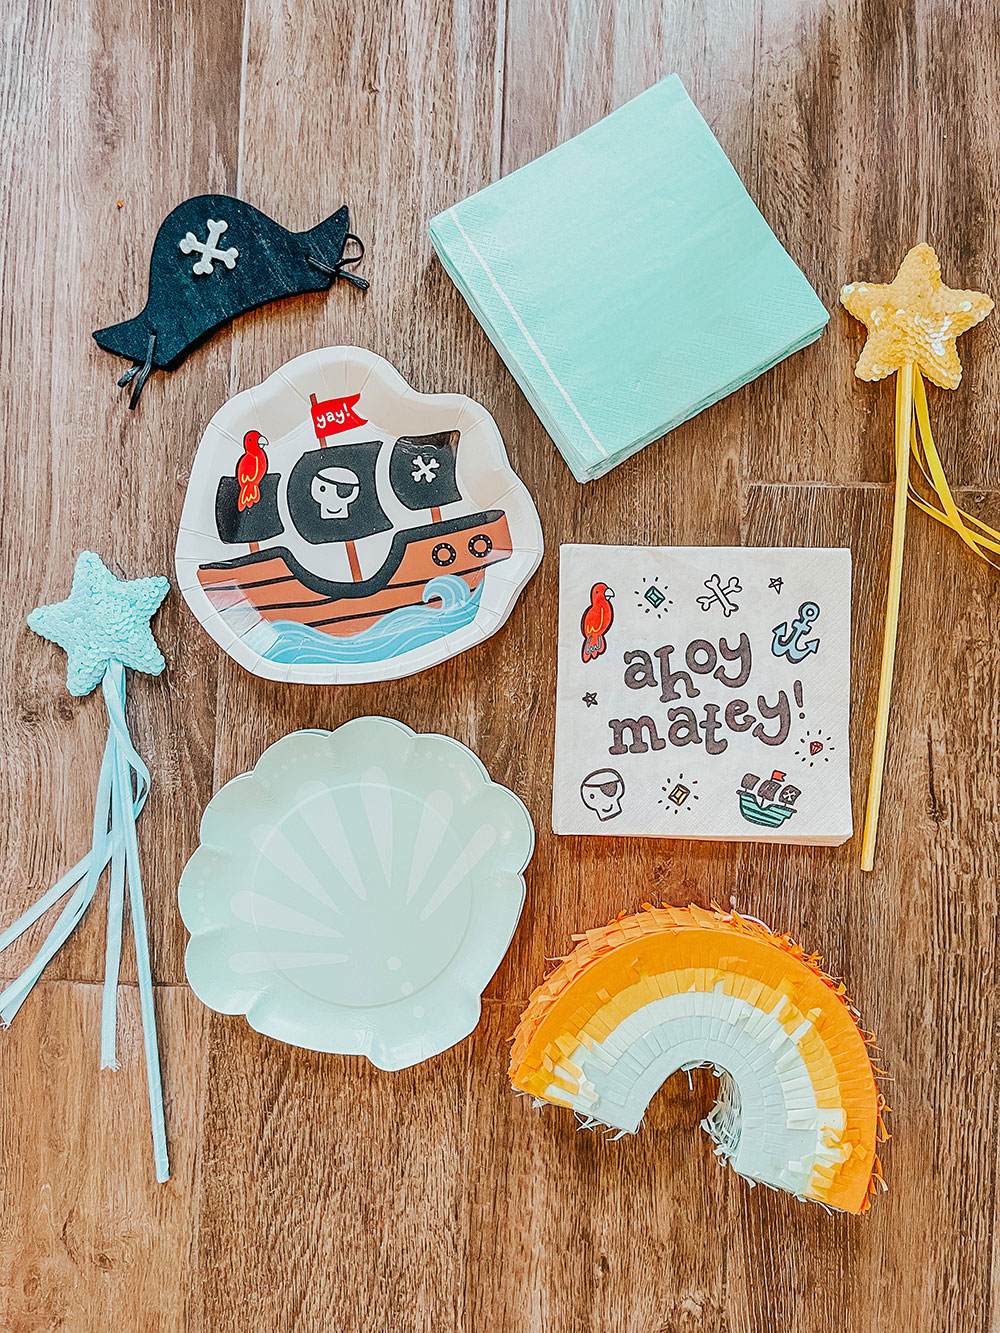 kids birthday party theme ideas pirate plates mermaid shell plates